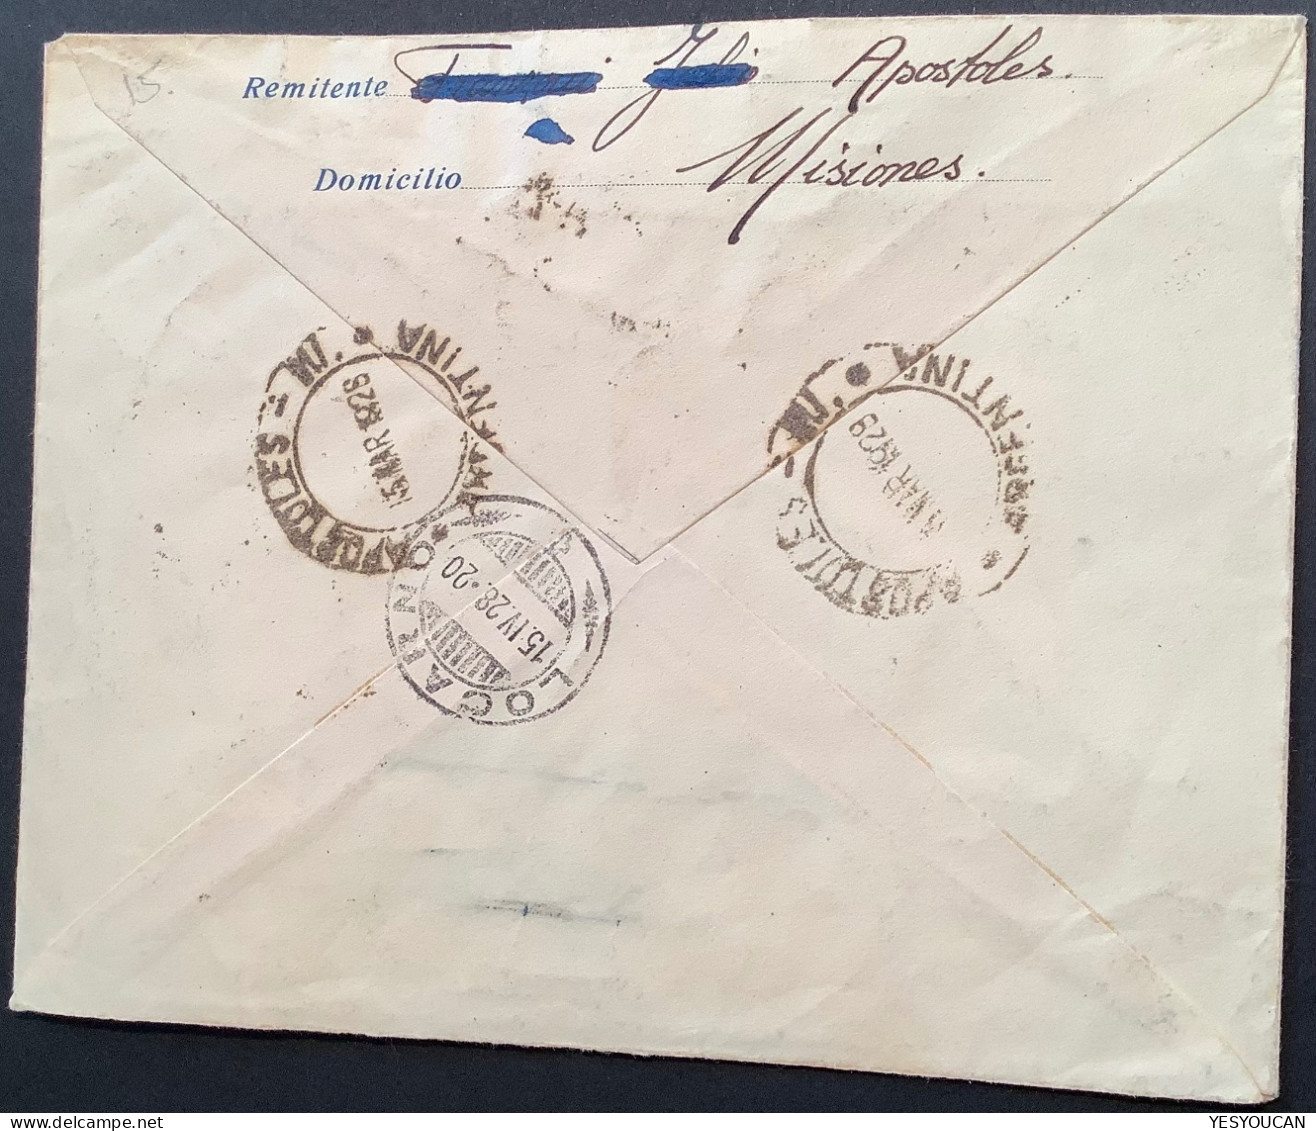 APOSTOLES MISIONES 1928 (Posadas) Cds On Via Aerea 12c Postal Stationery Enveloppe>Locarno (Argentina Air Mail Cover - Enteros Postales